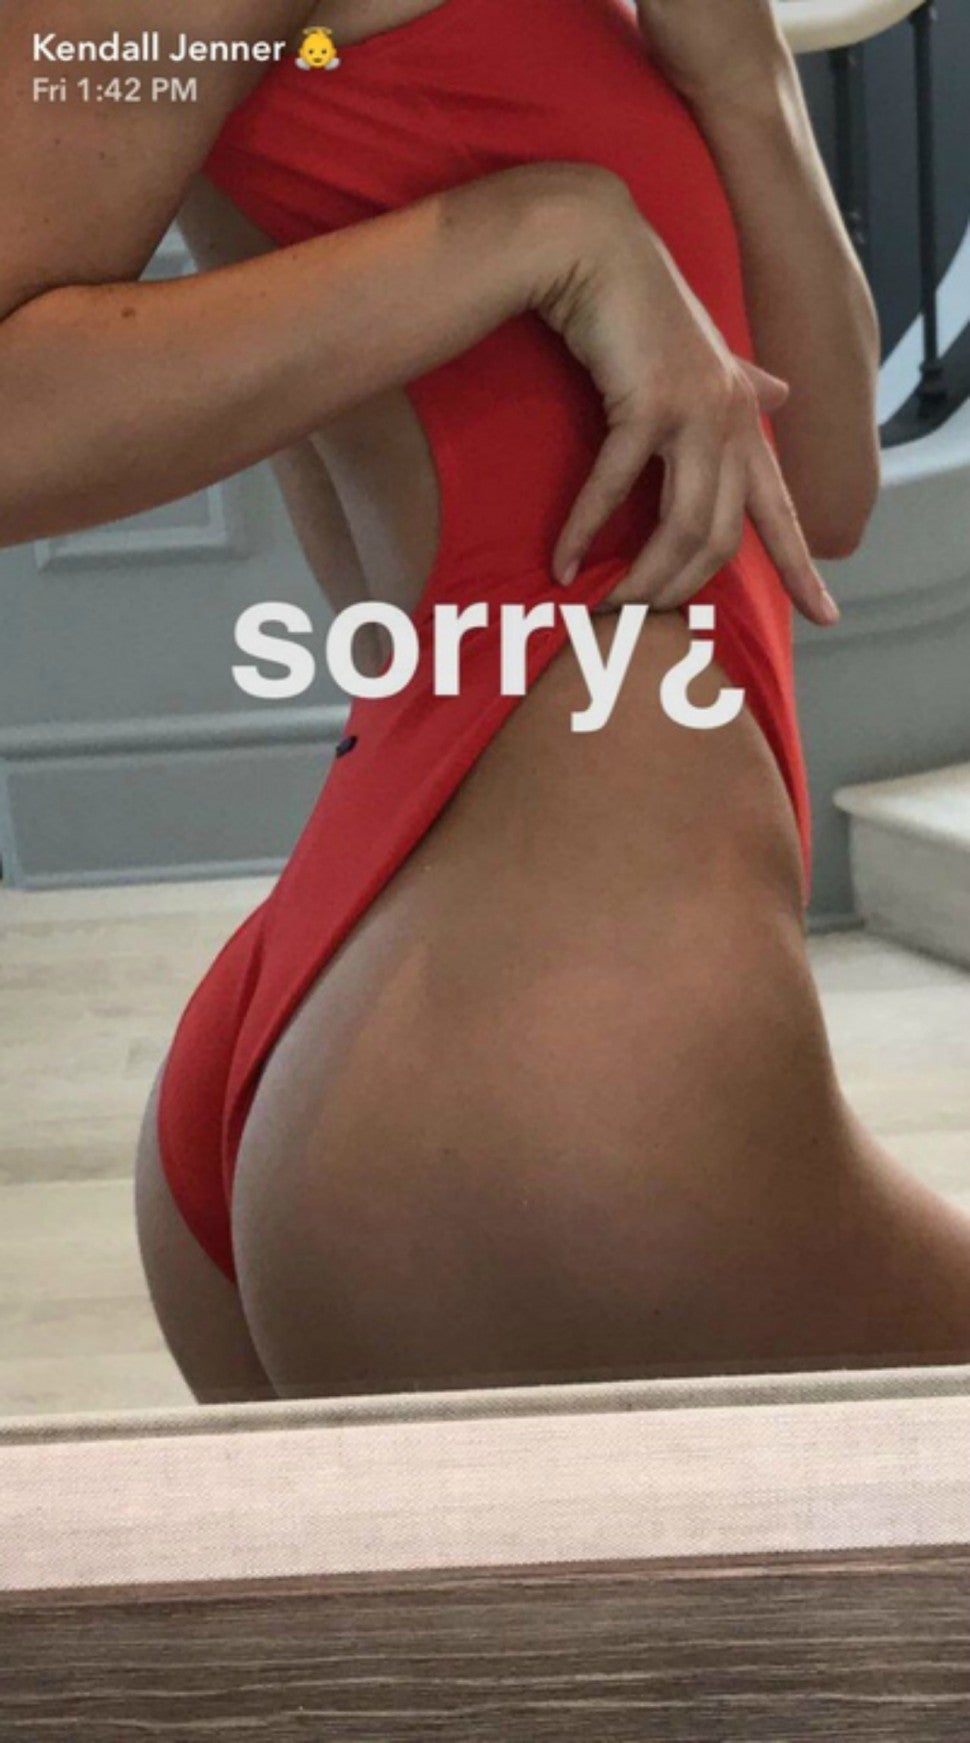 20 Sexy Snapchats